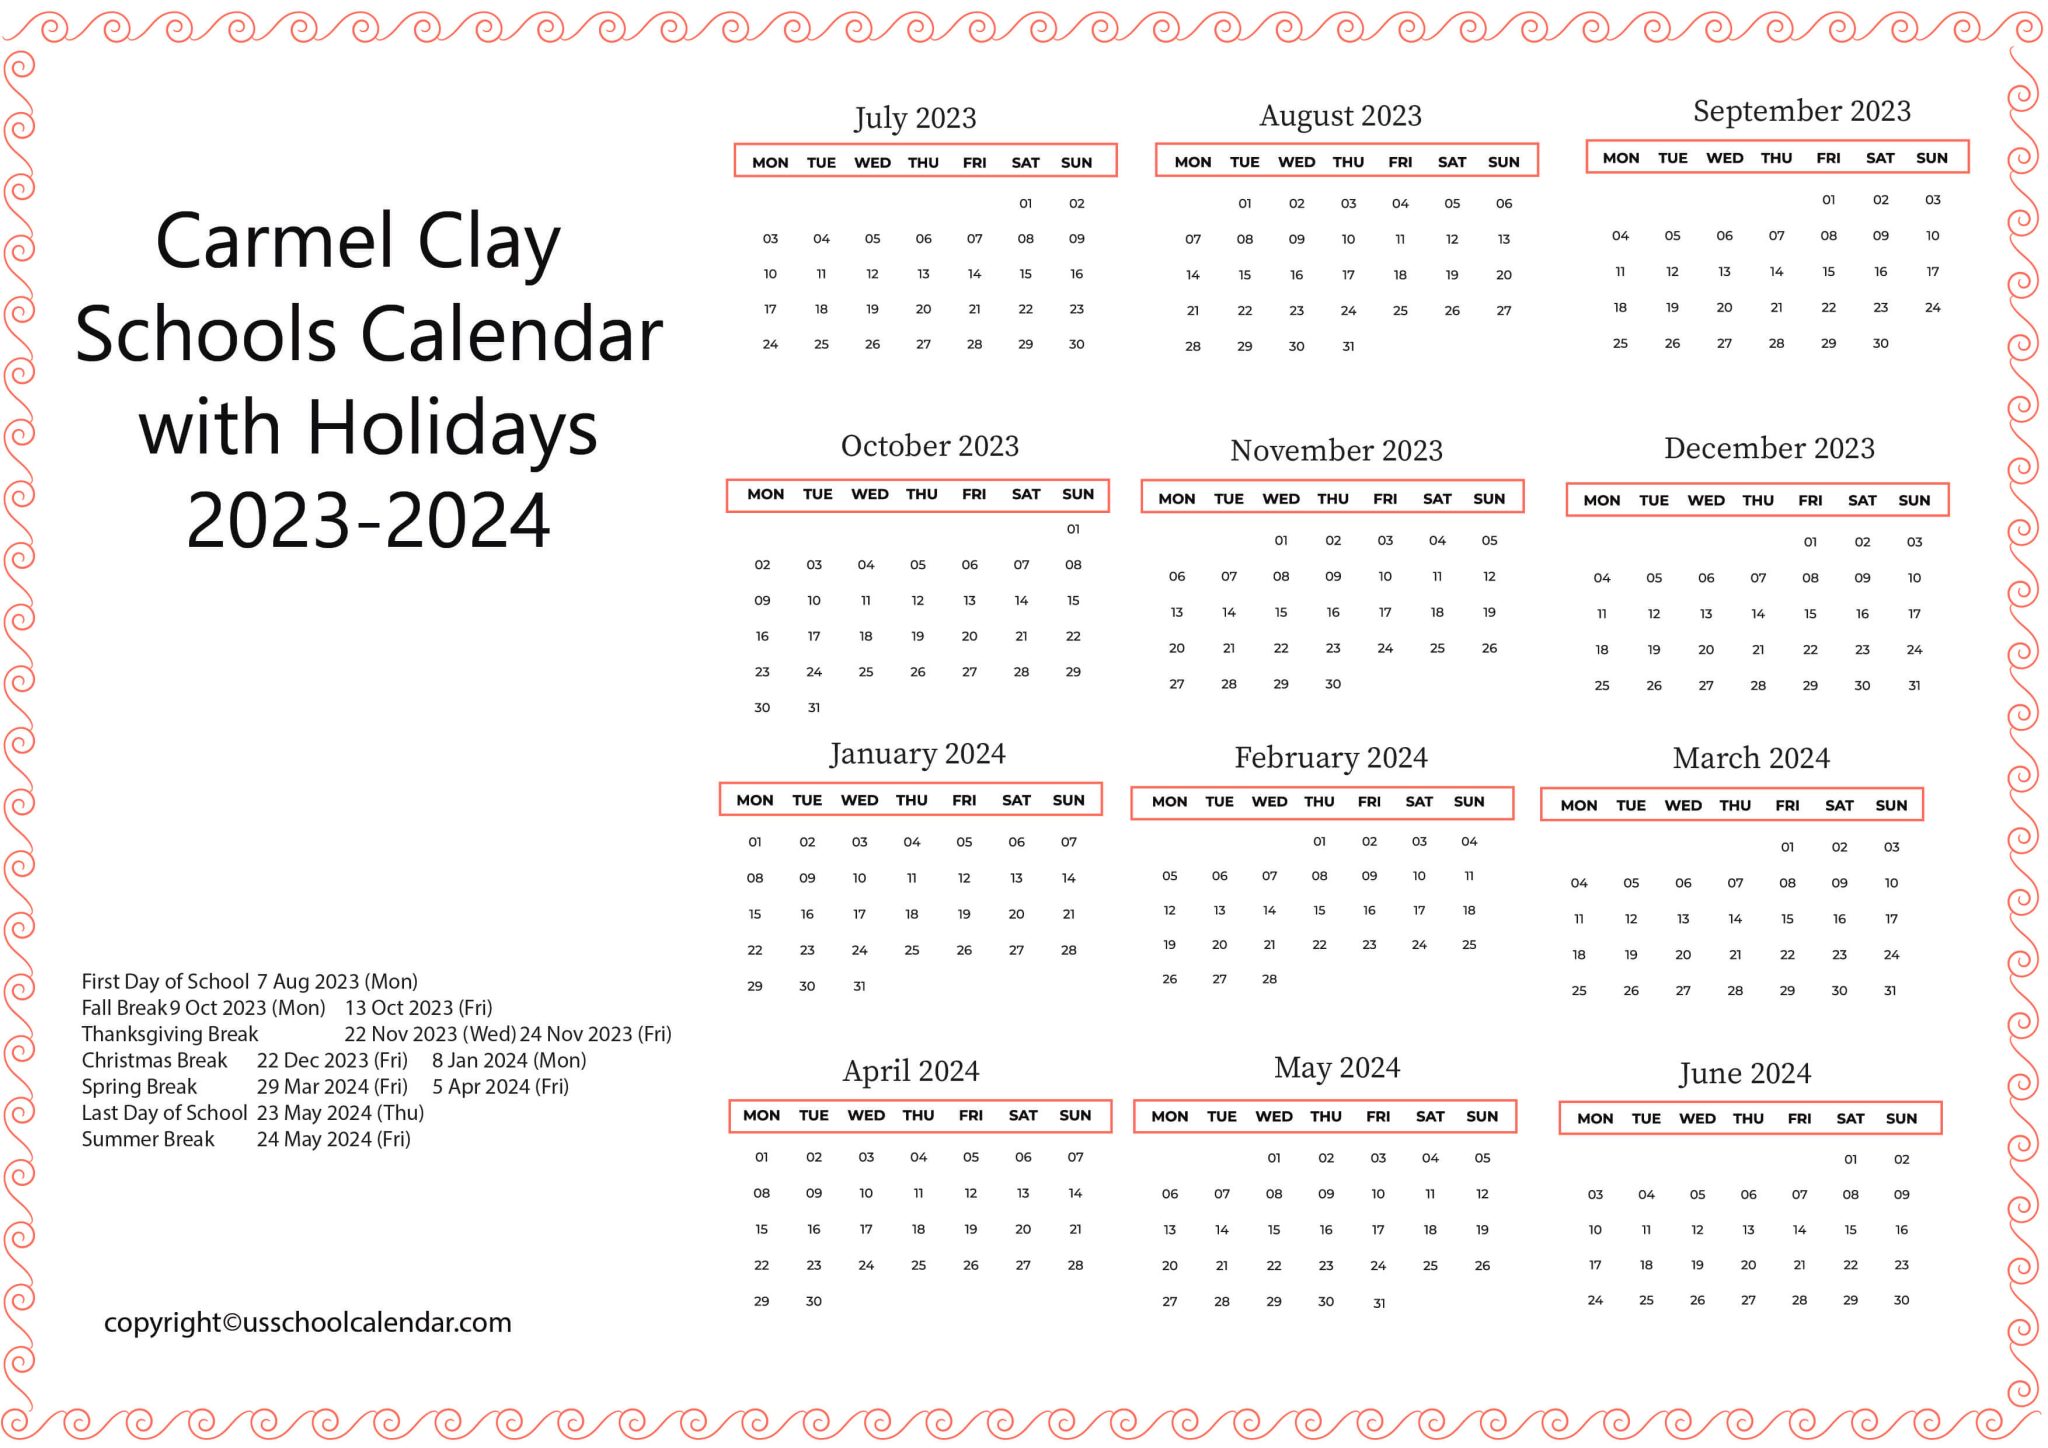 Carmel Clay Schools Calendar with Holidays 2023-2024